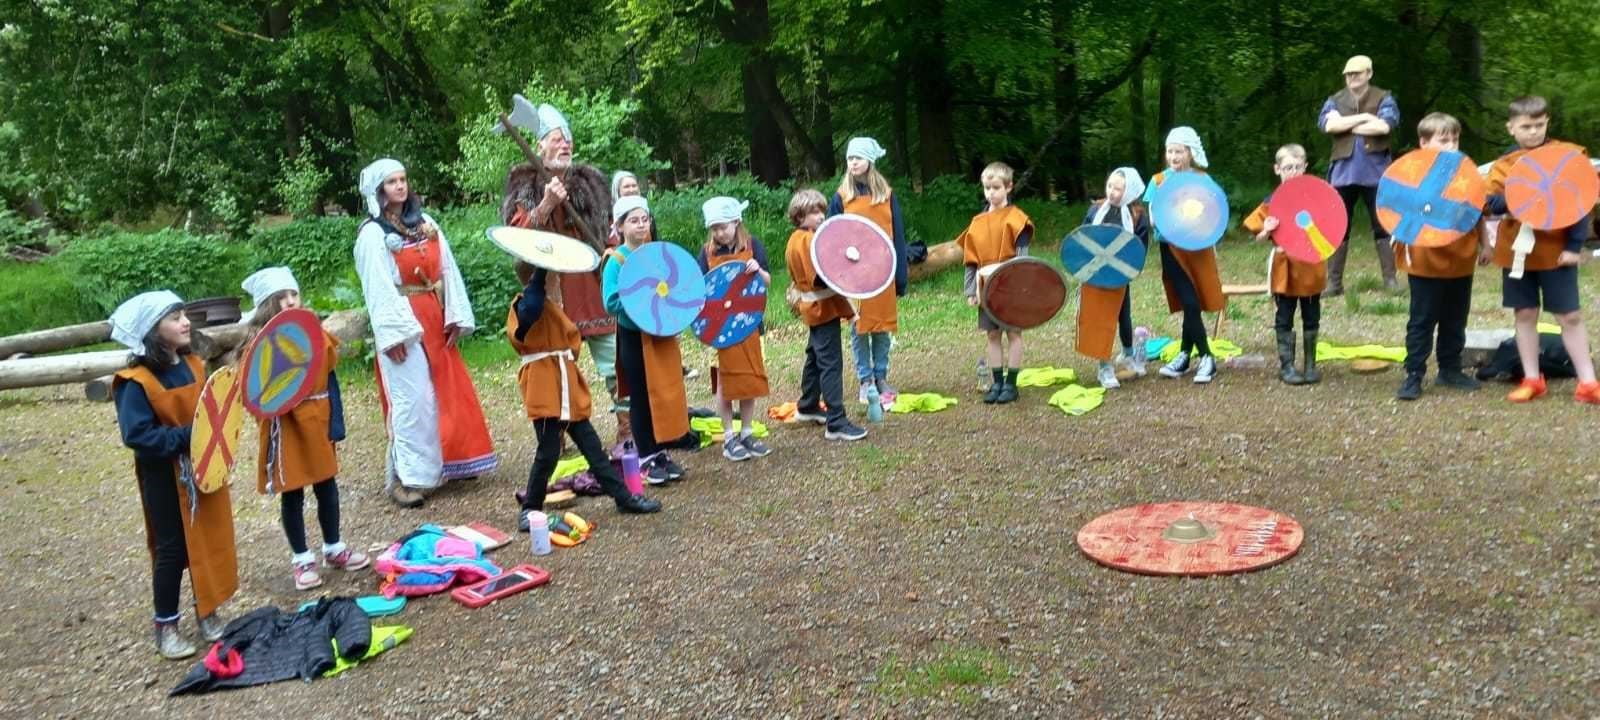 The Kiltearn children embraced the Viking theme.